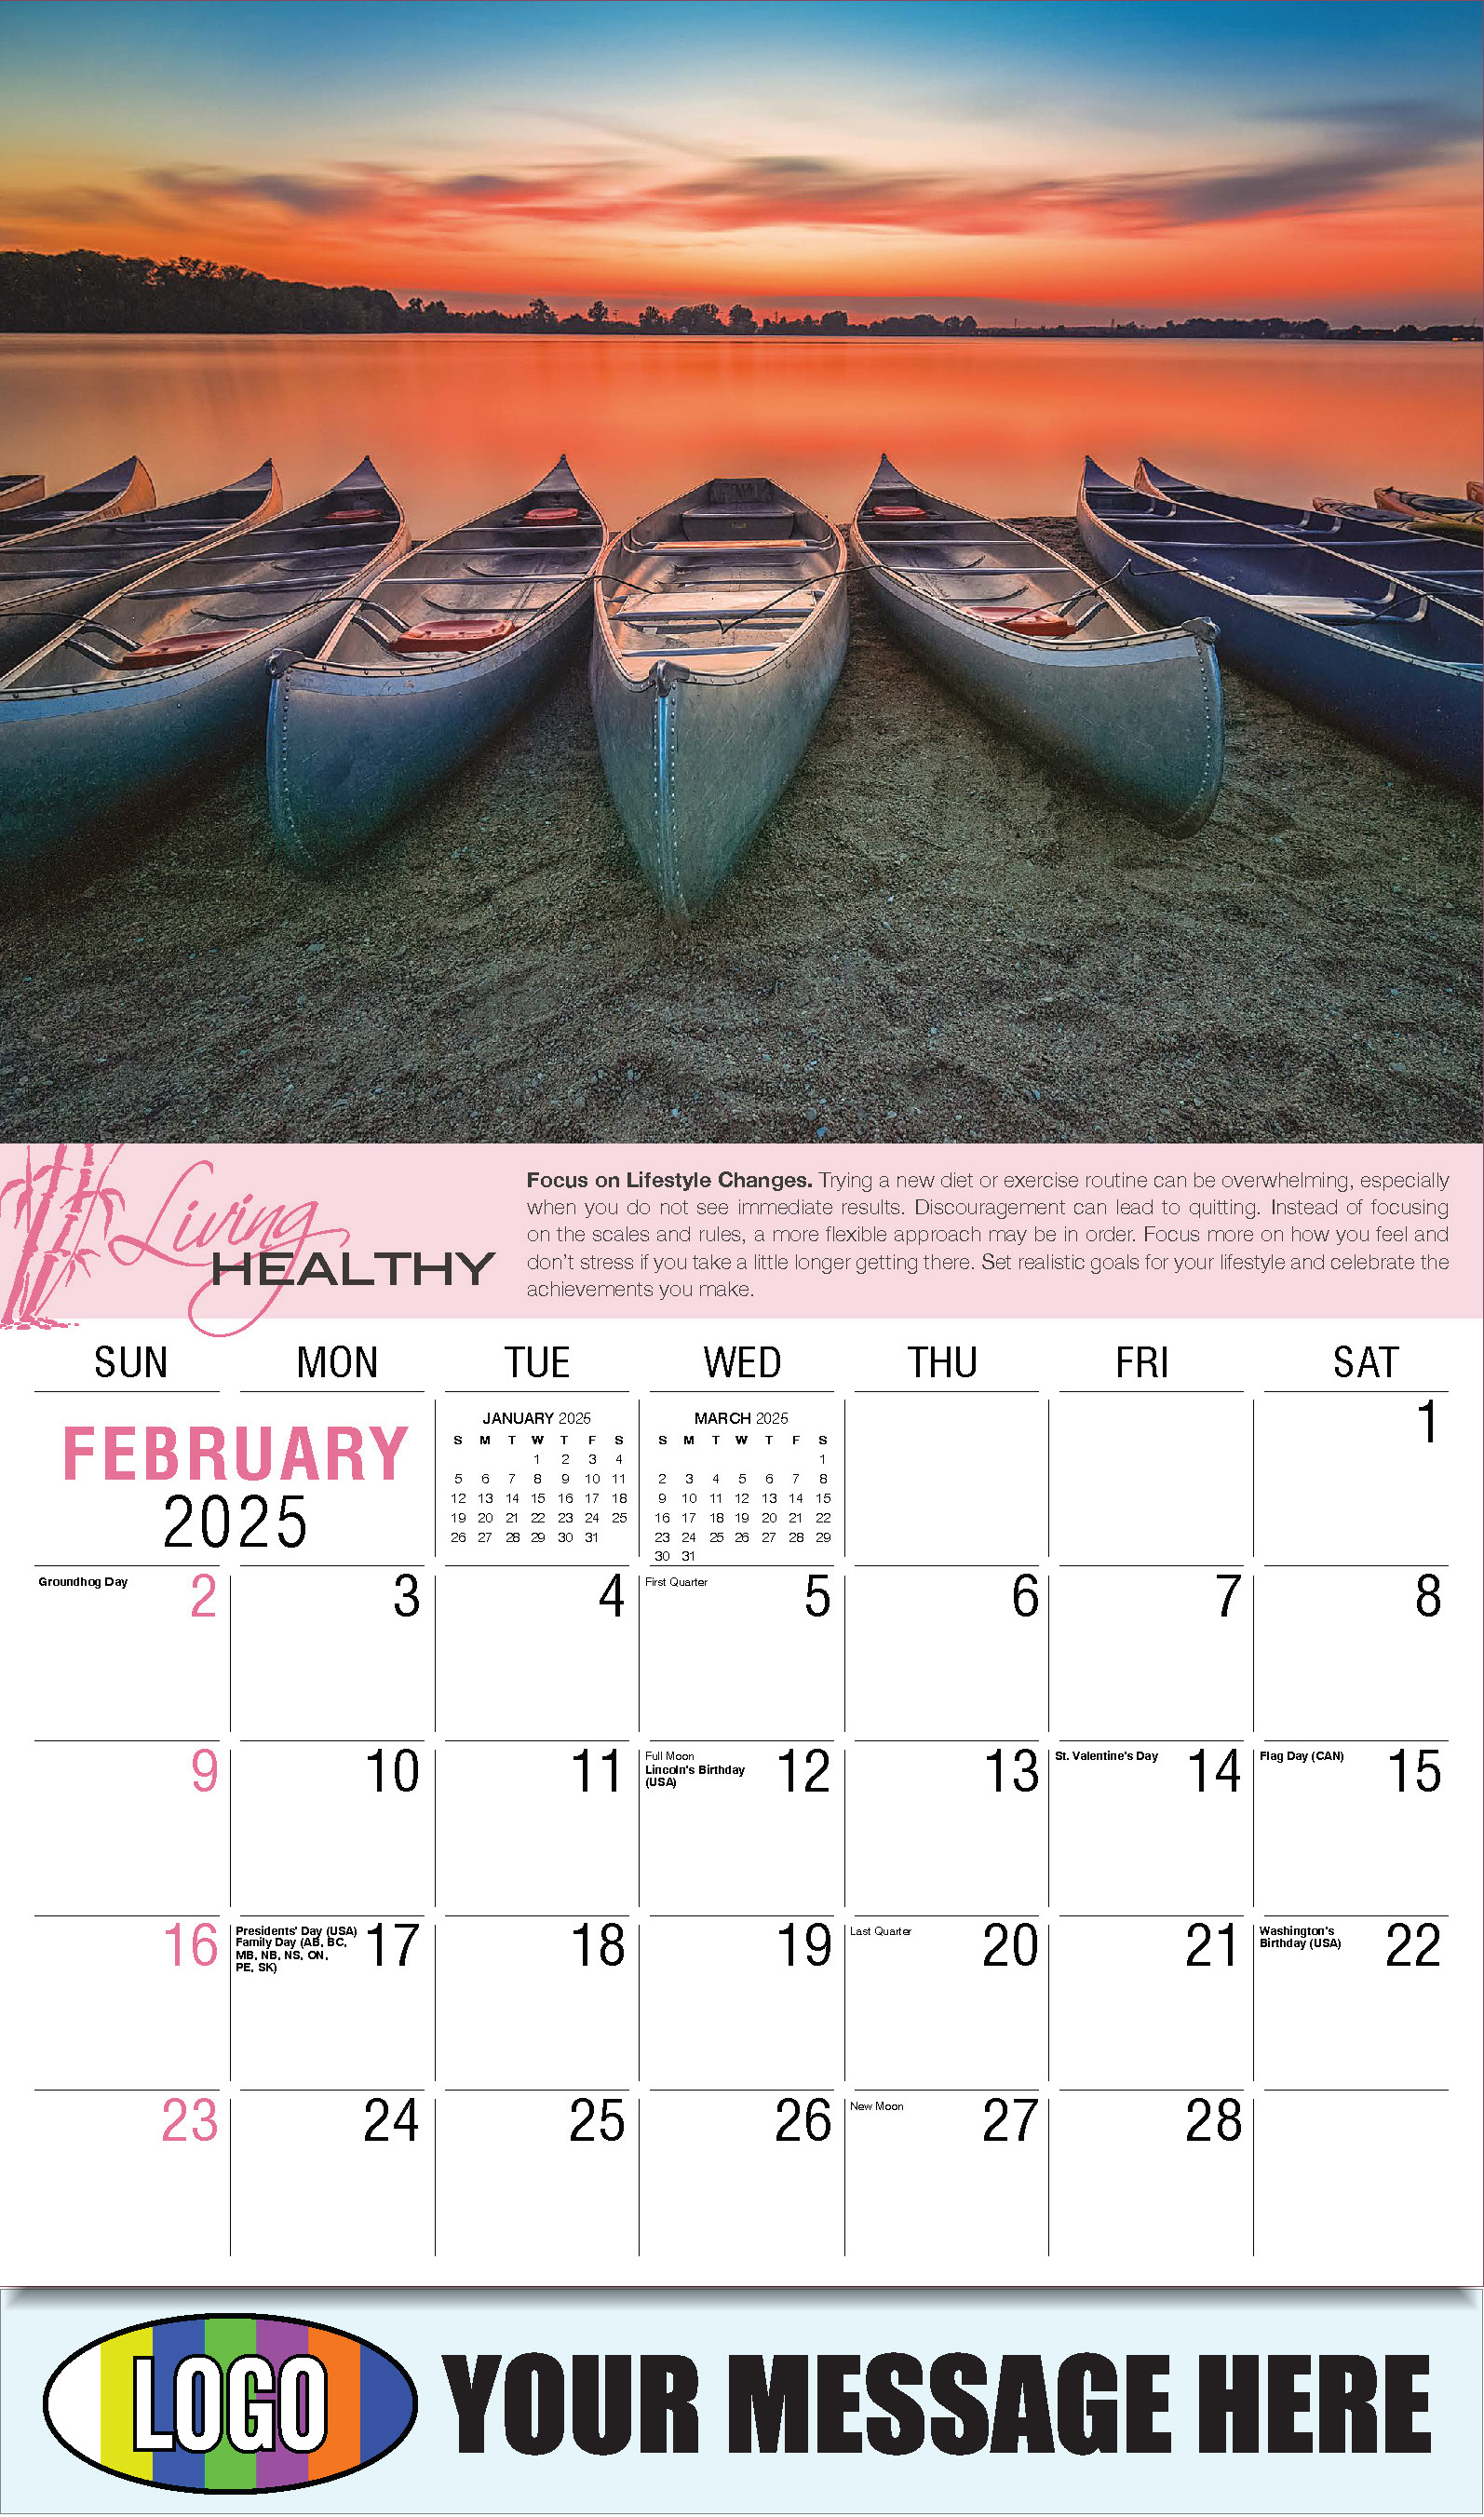 Living Healthy 2025 Business Promotional Calendar - February